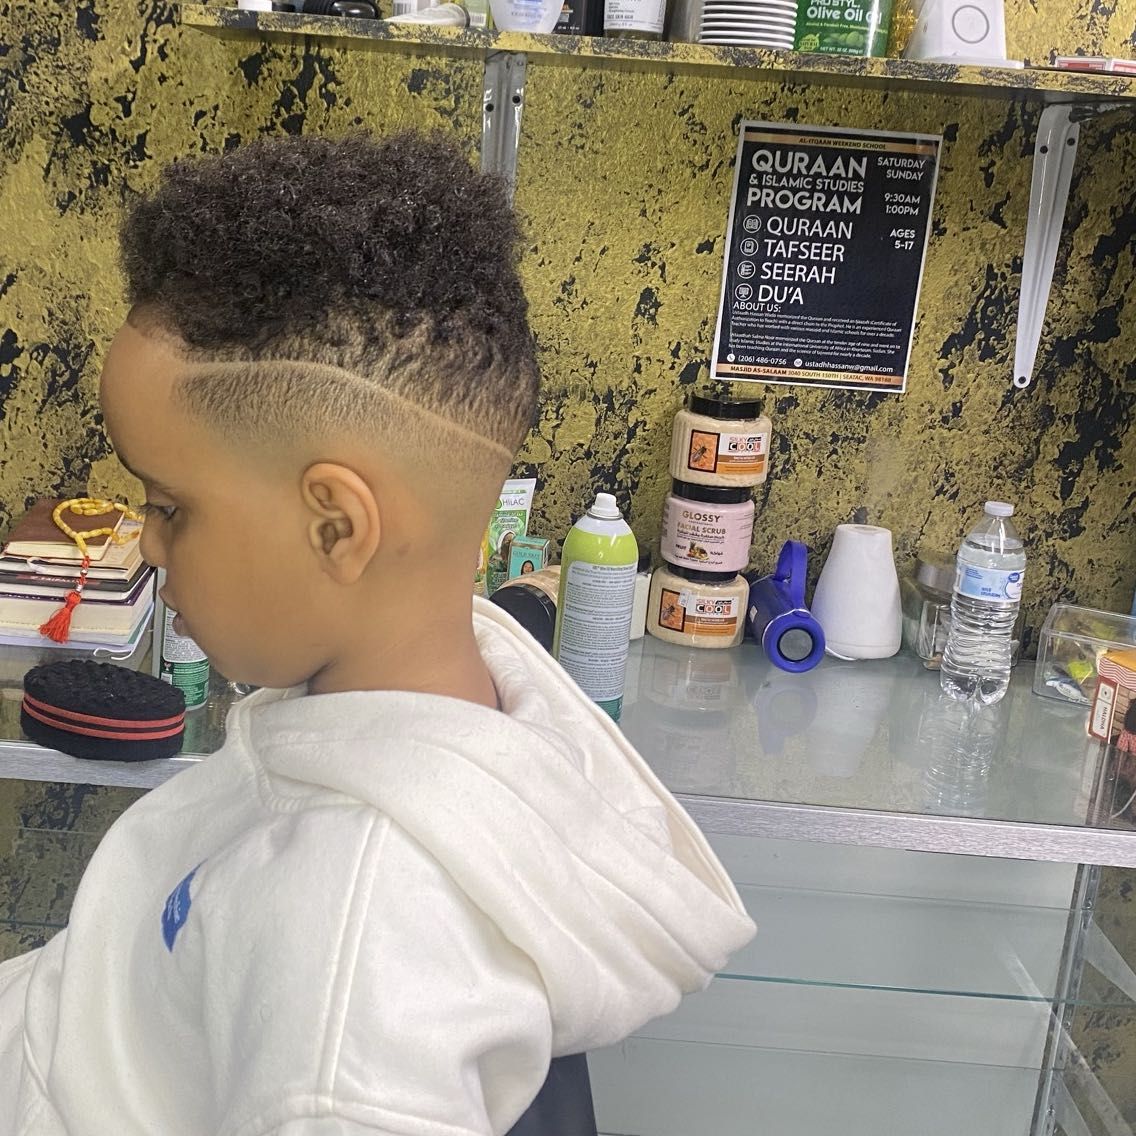 Kids haircuts under 12 years old portfolio